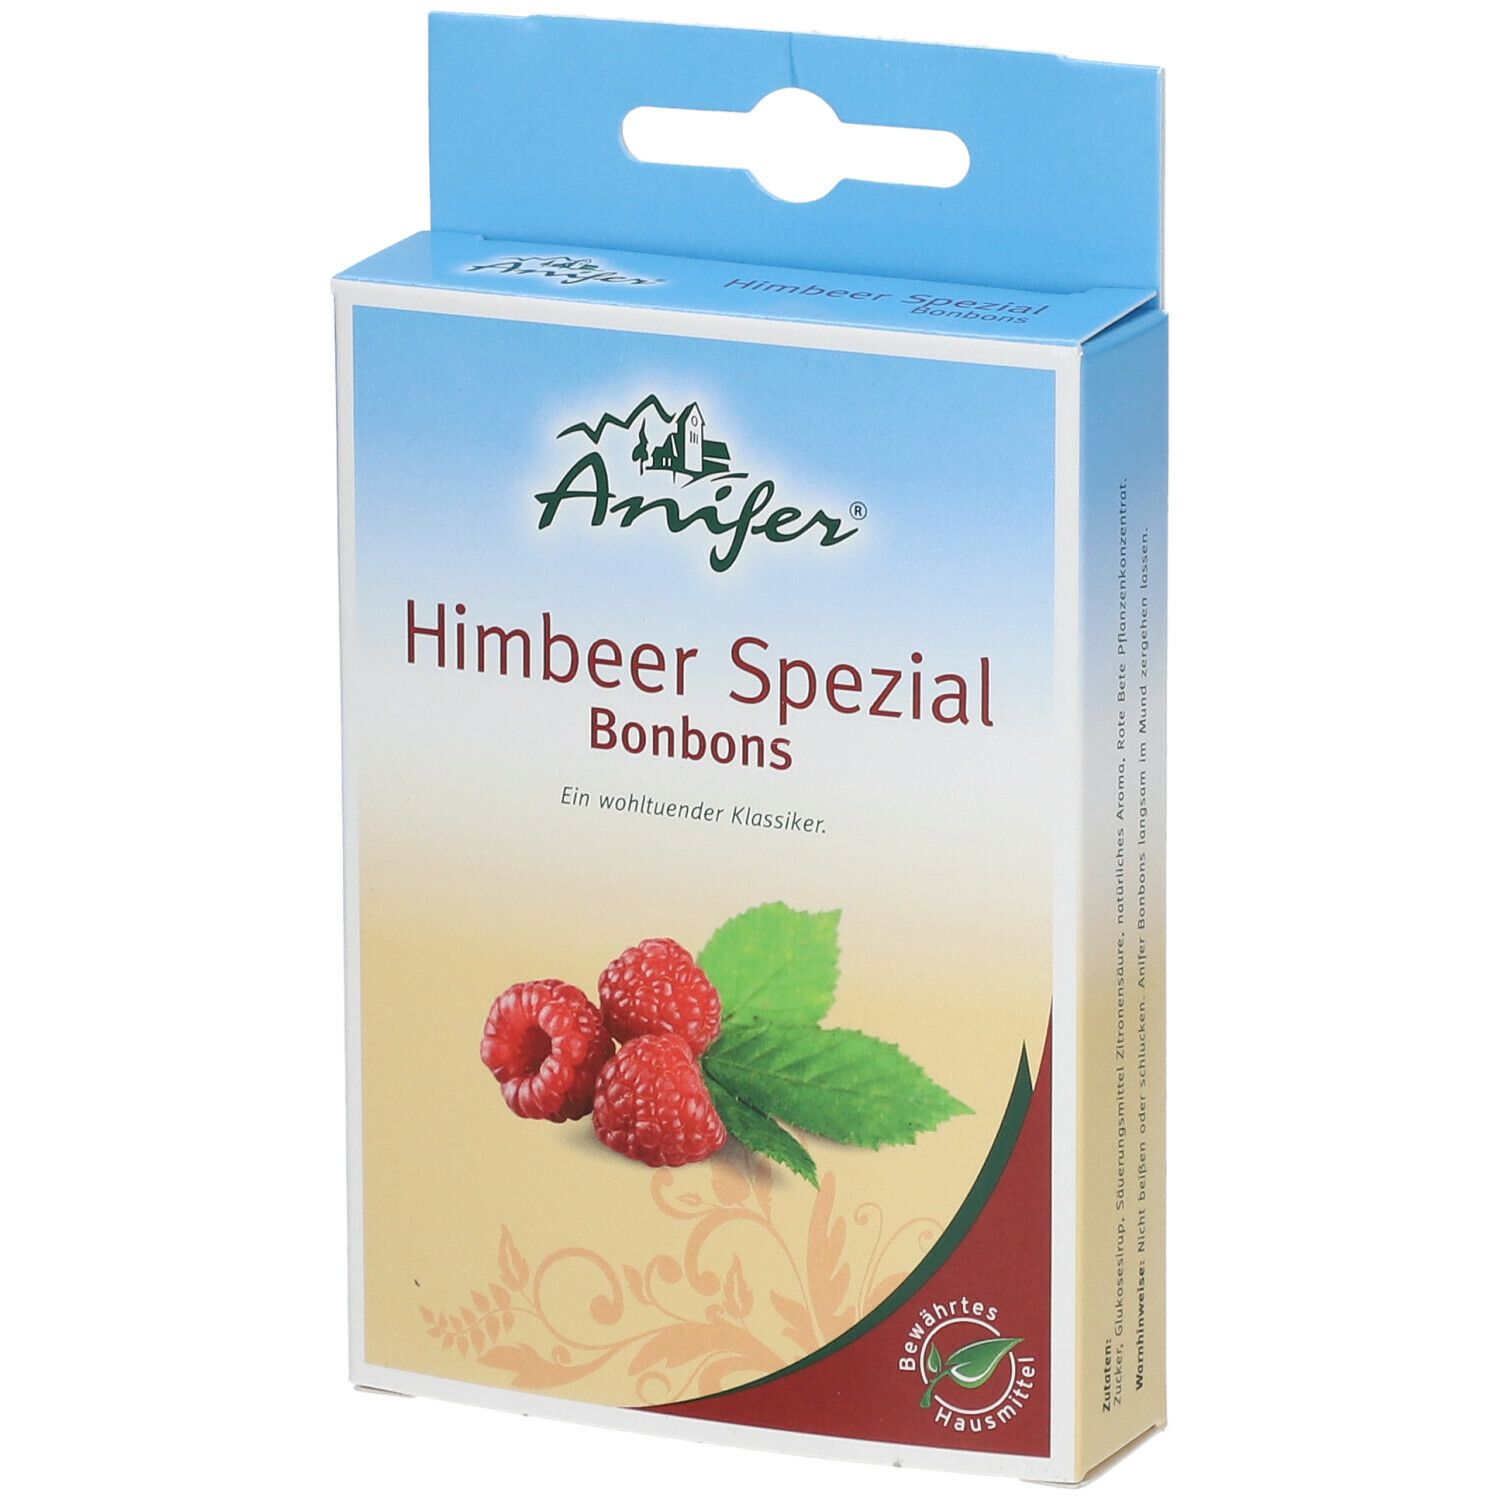 Image of Anifer® Himbeer Spezial Bonbons